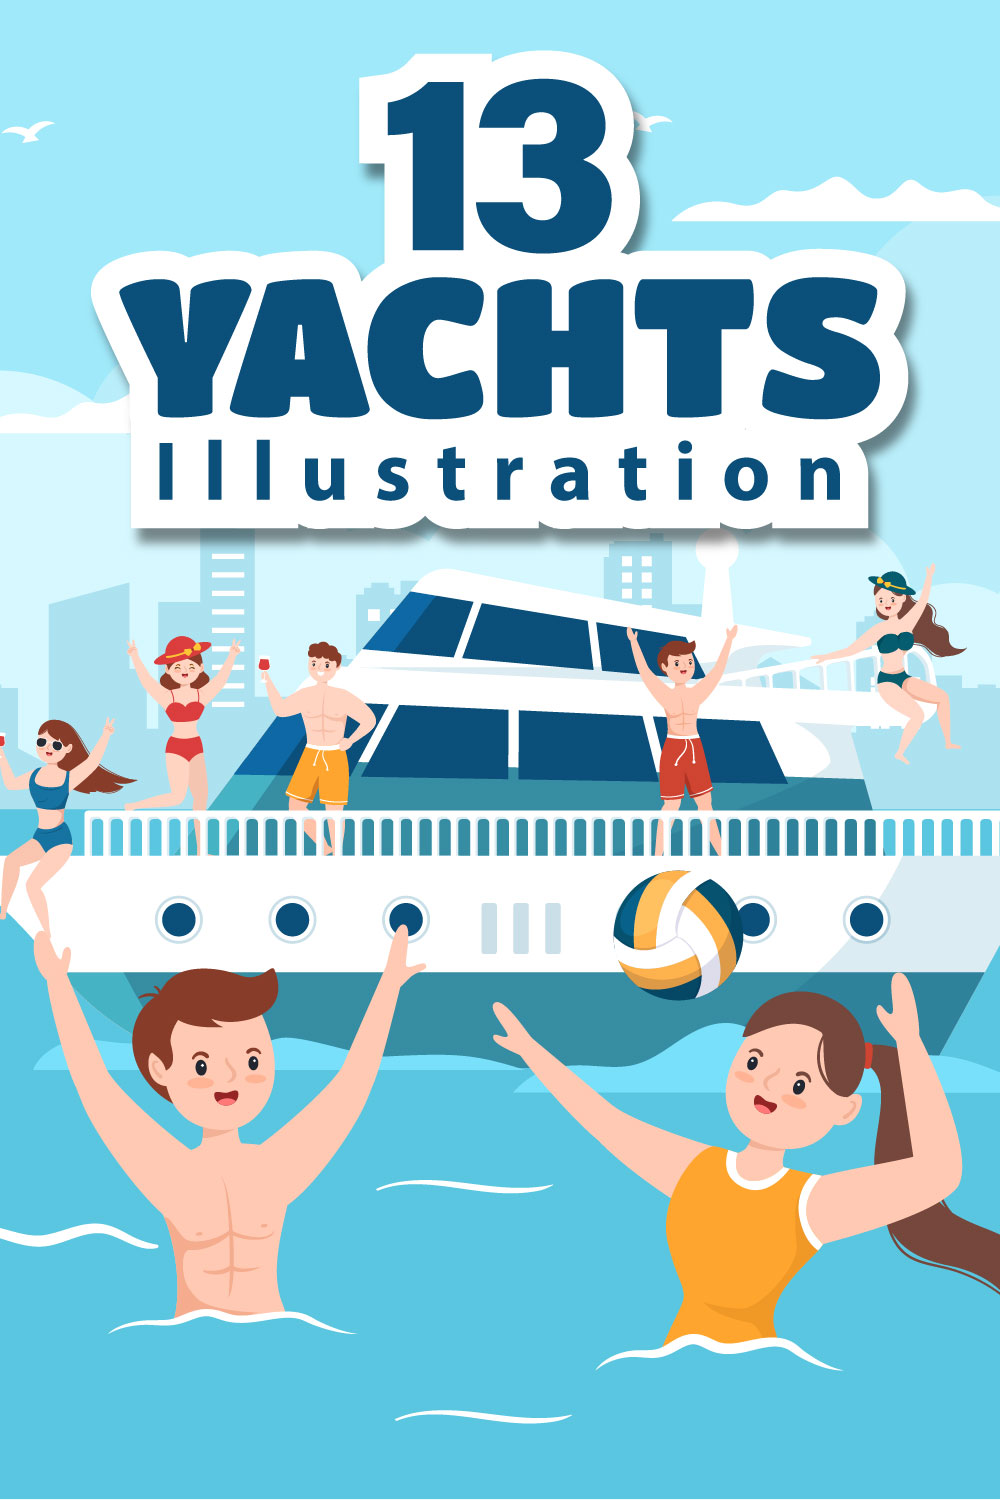 13 Yachts at Ocean Illustration pinterest image.